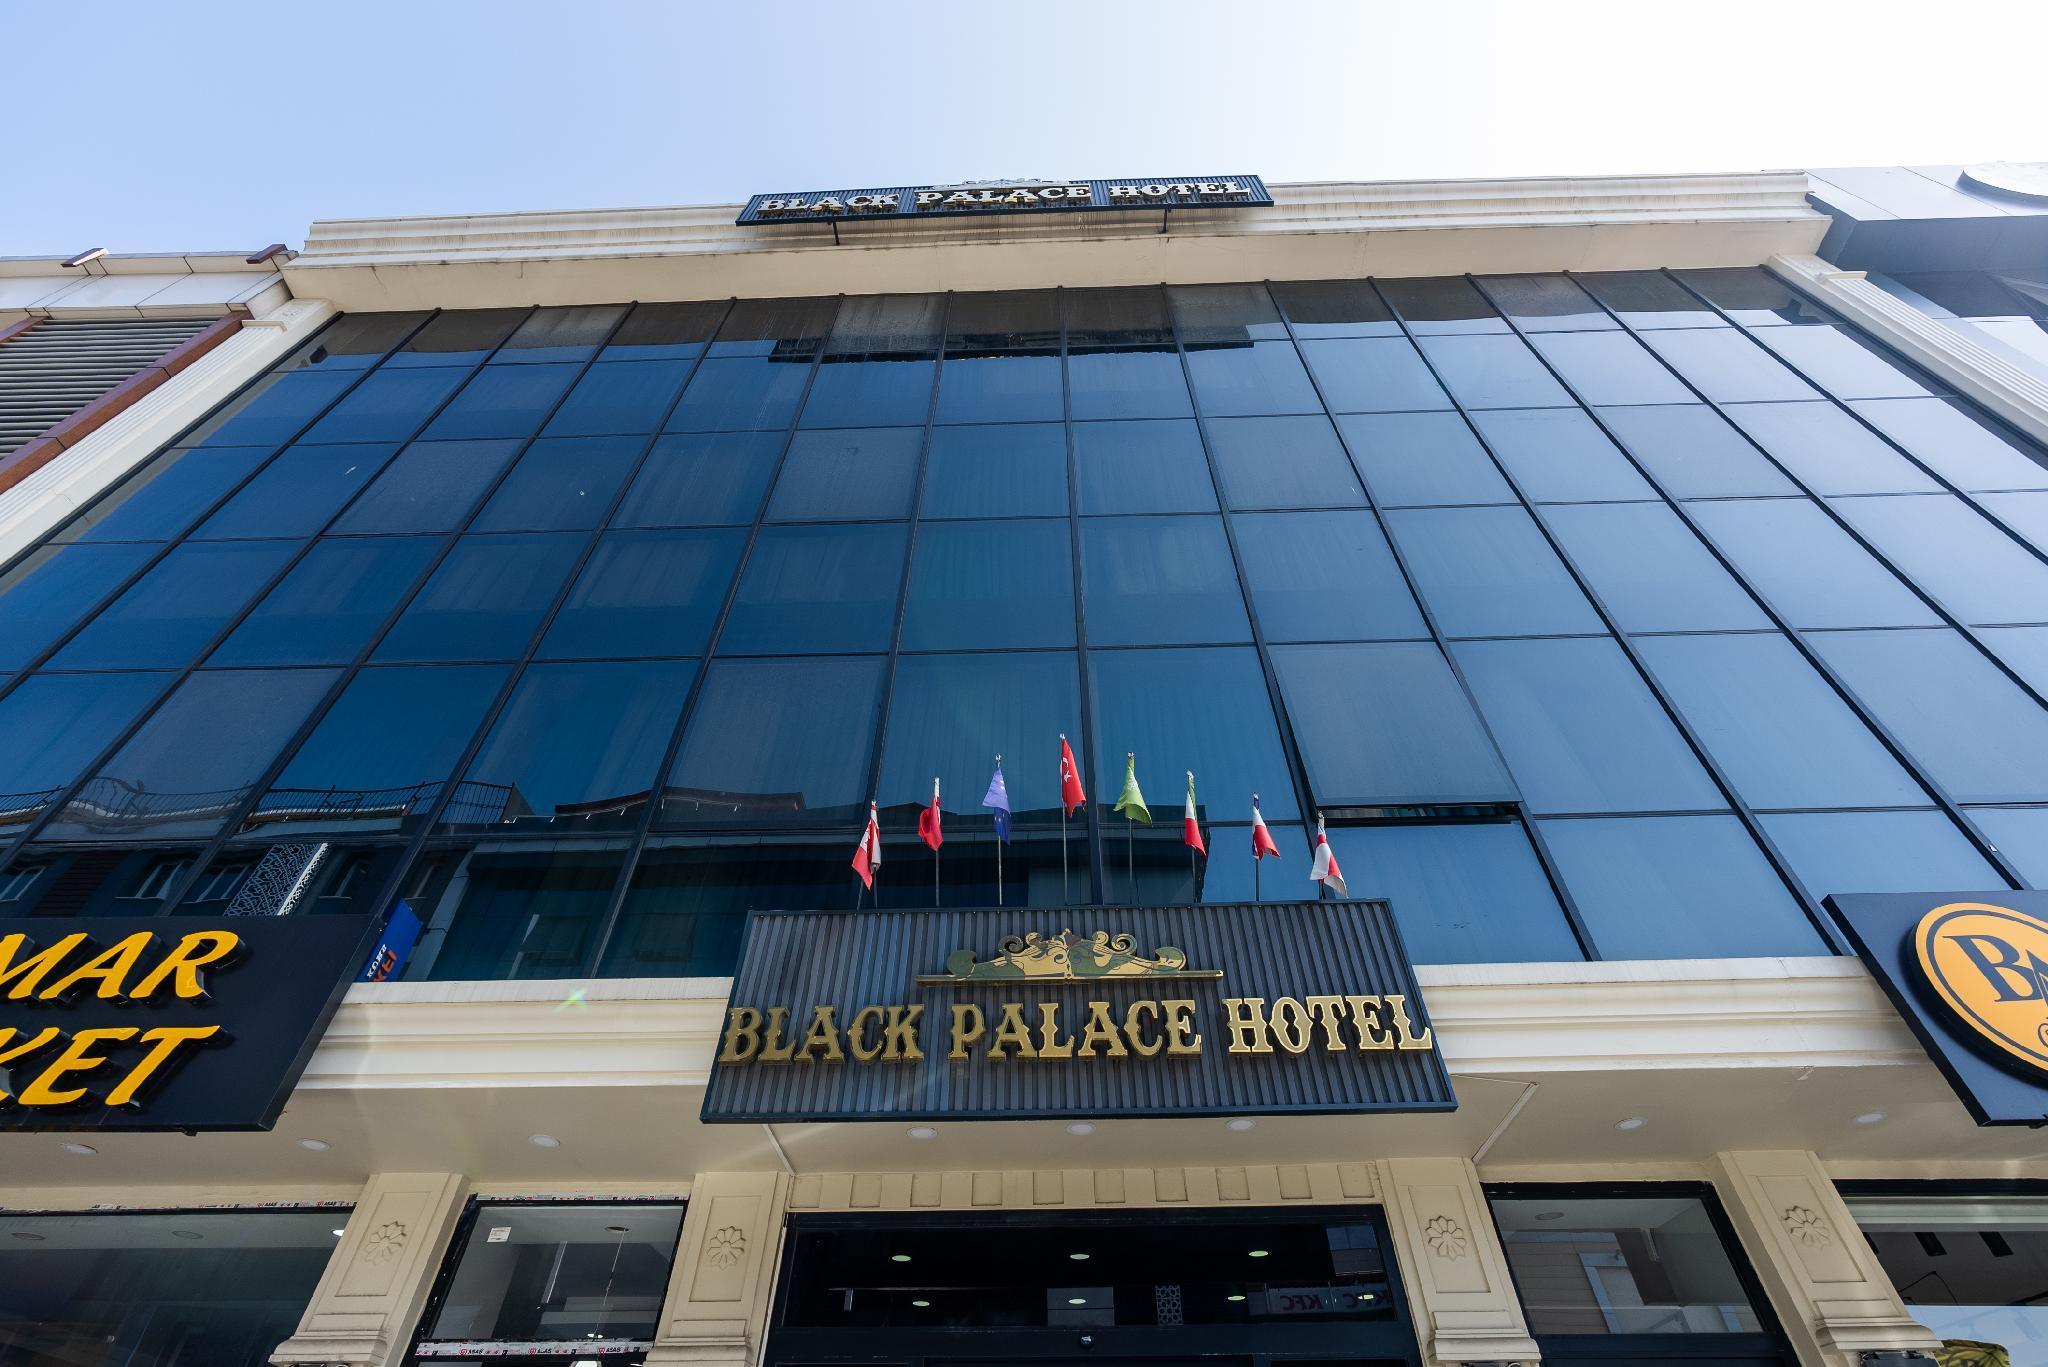 Black Palace Hotel - Sefaköy